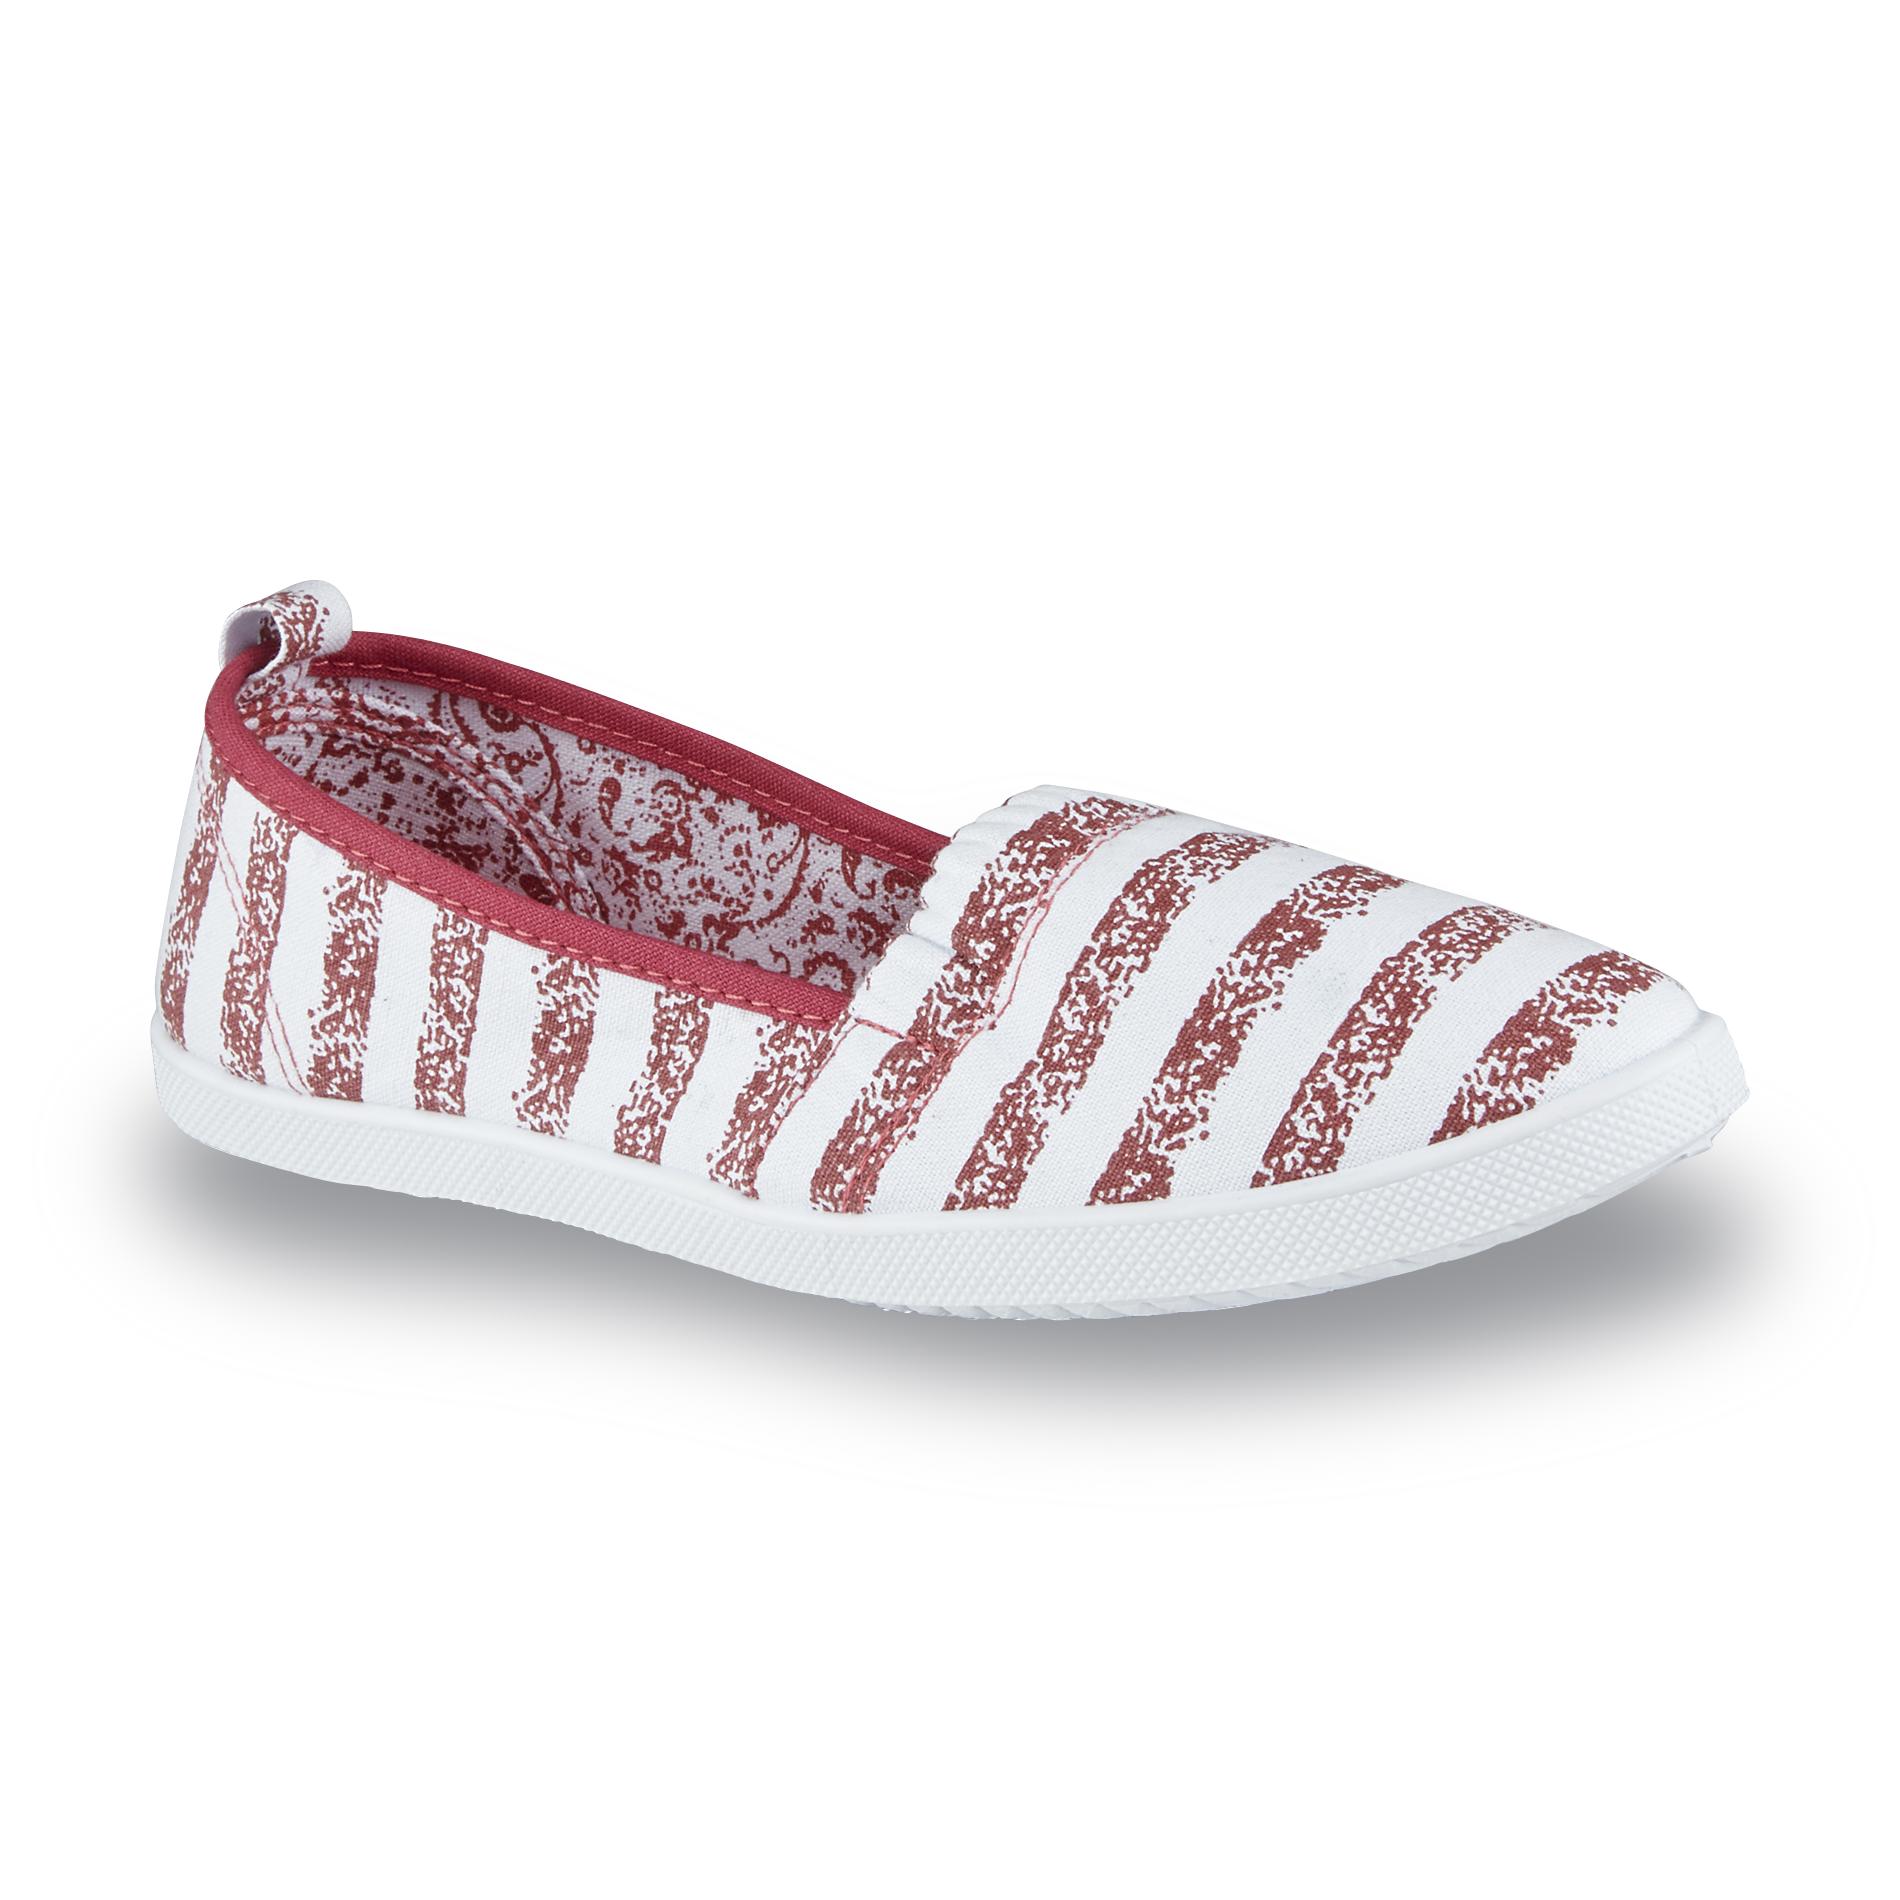 Basic Editions Women's Dakota Red/White/Striped SlipOn Shoe